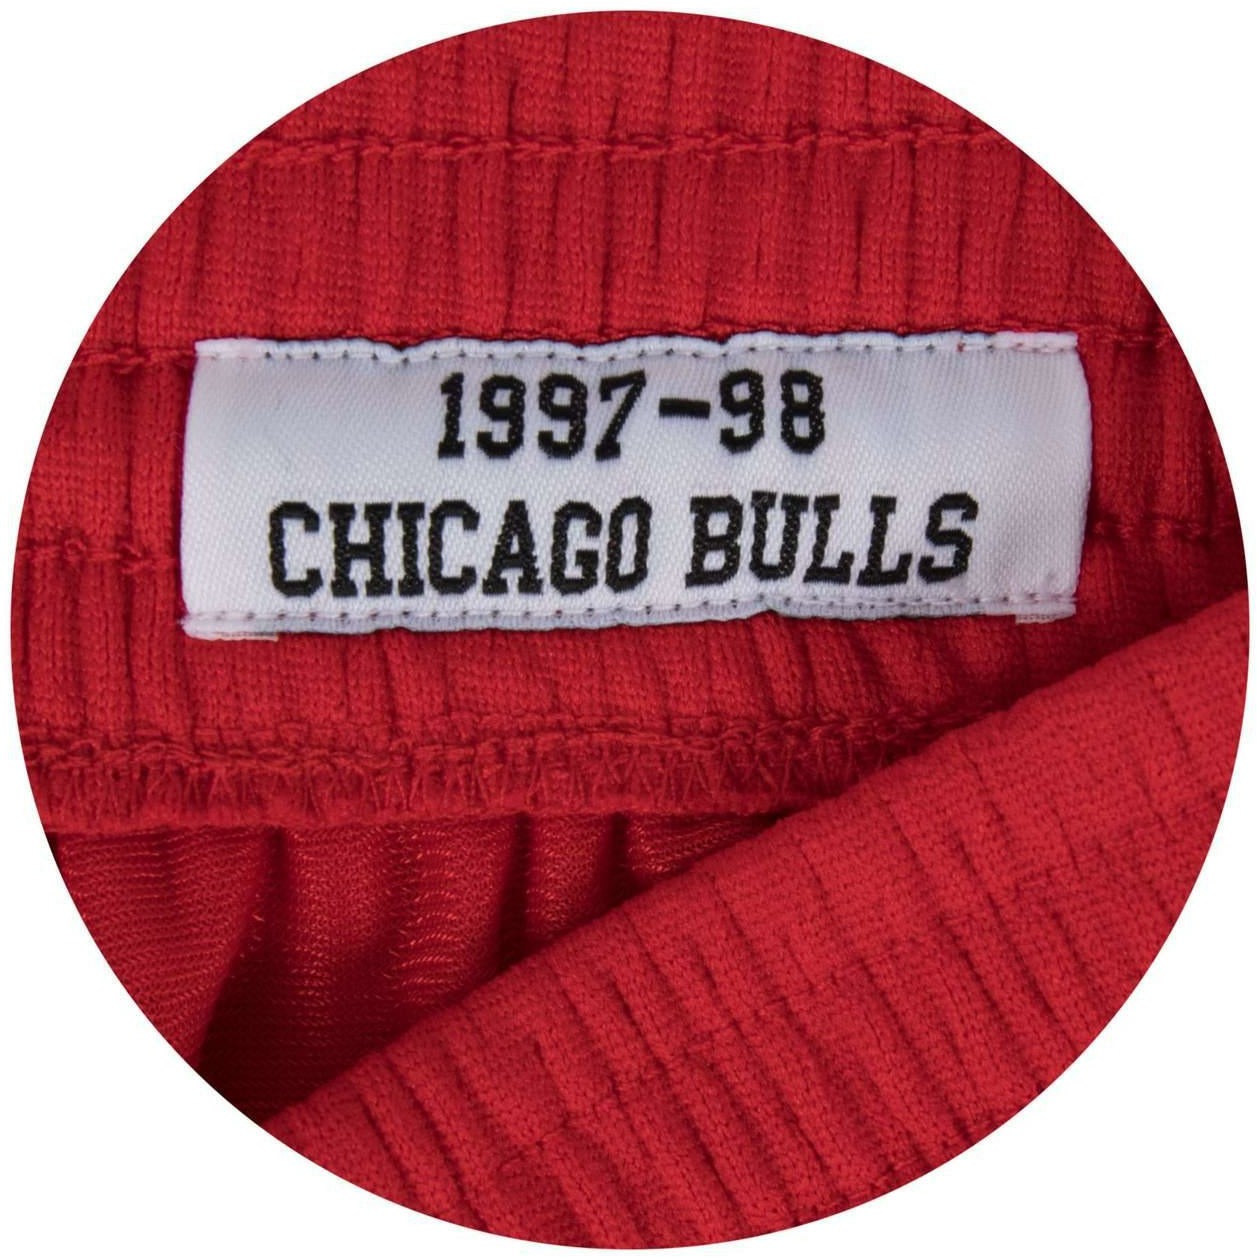 Mitchell & Ness - Chicago Bulls NBA Swingman Shorts 